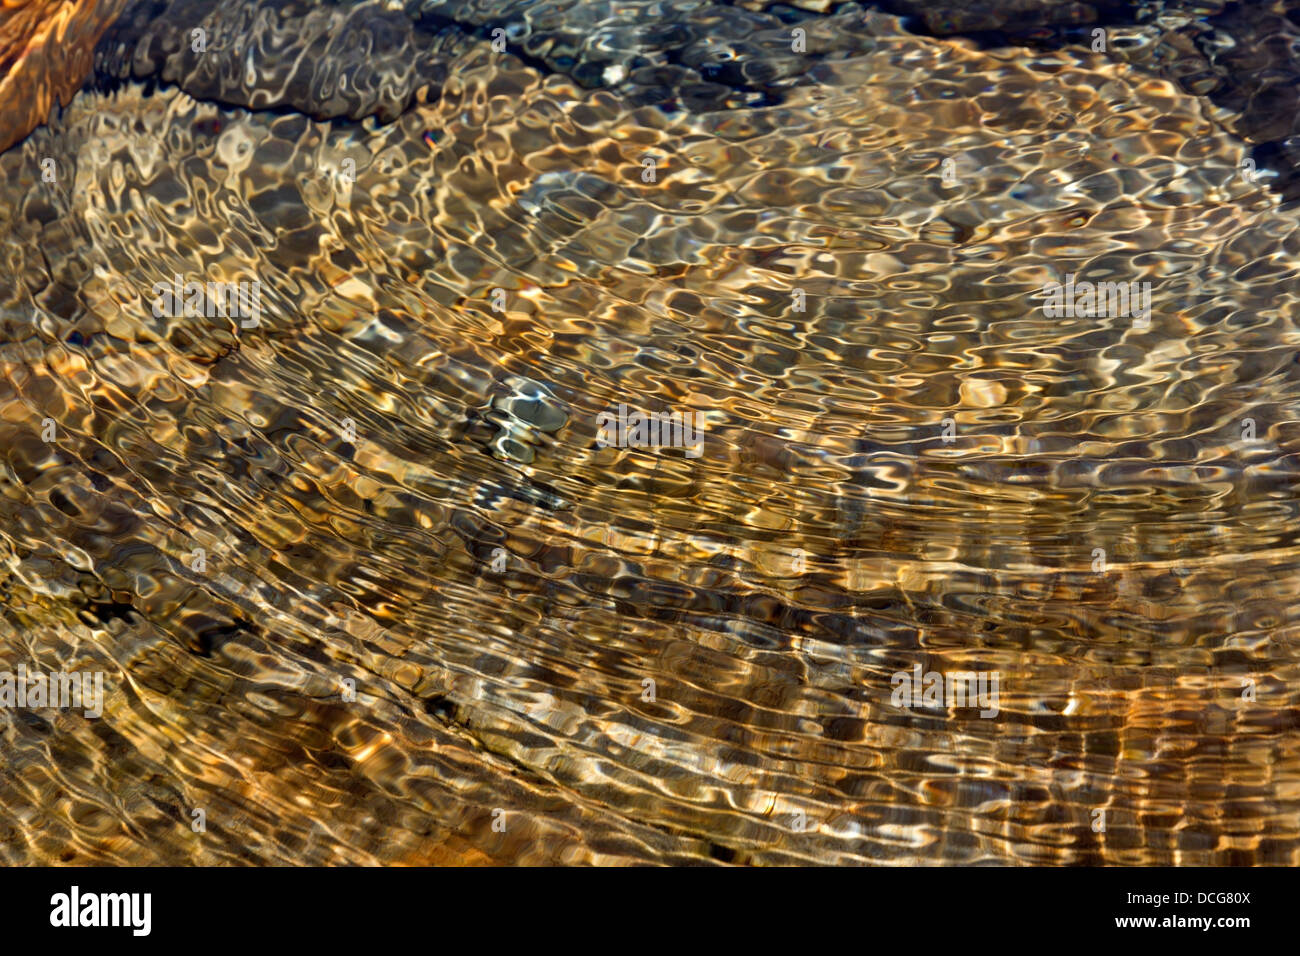 Bunte goldene abstrakte kreisförmige Wasser plätschert über sonnigen felsigen Bachbett, UK Stockfoto